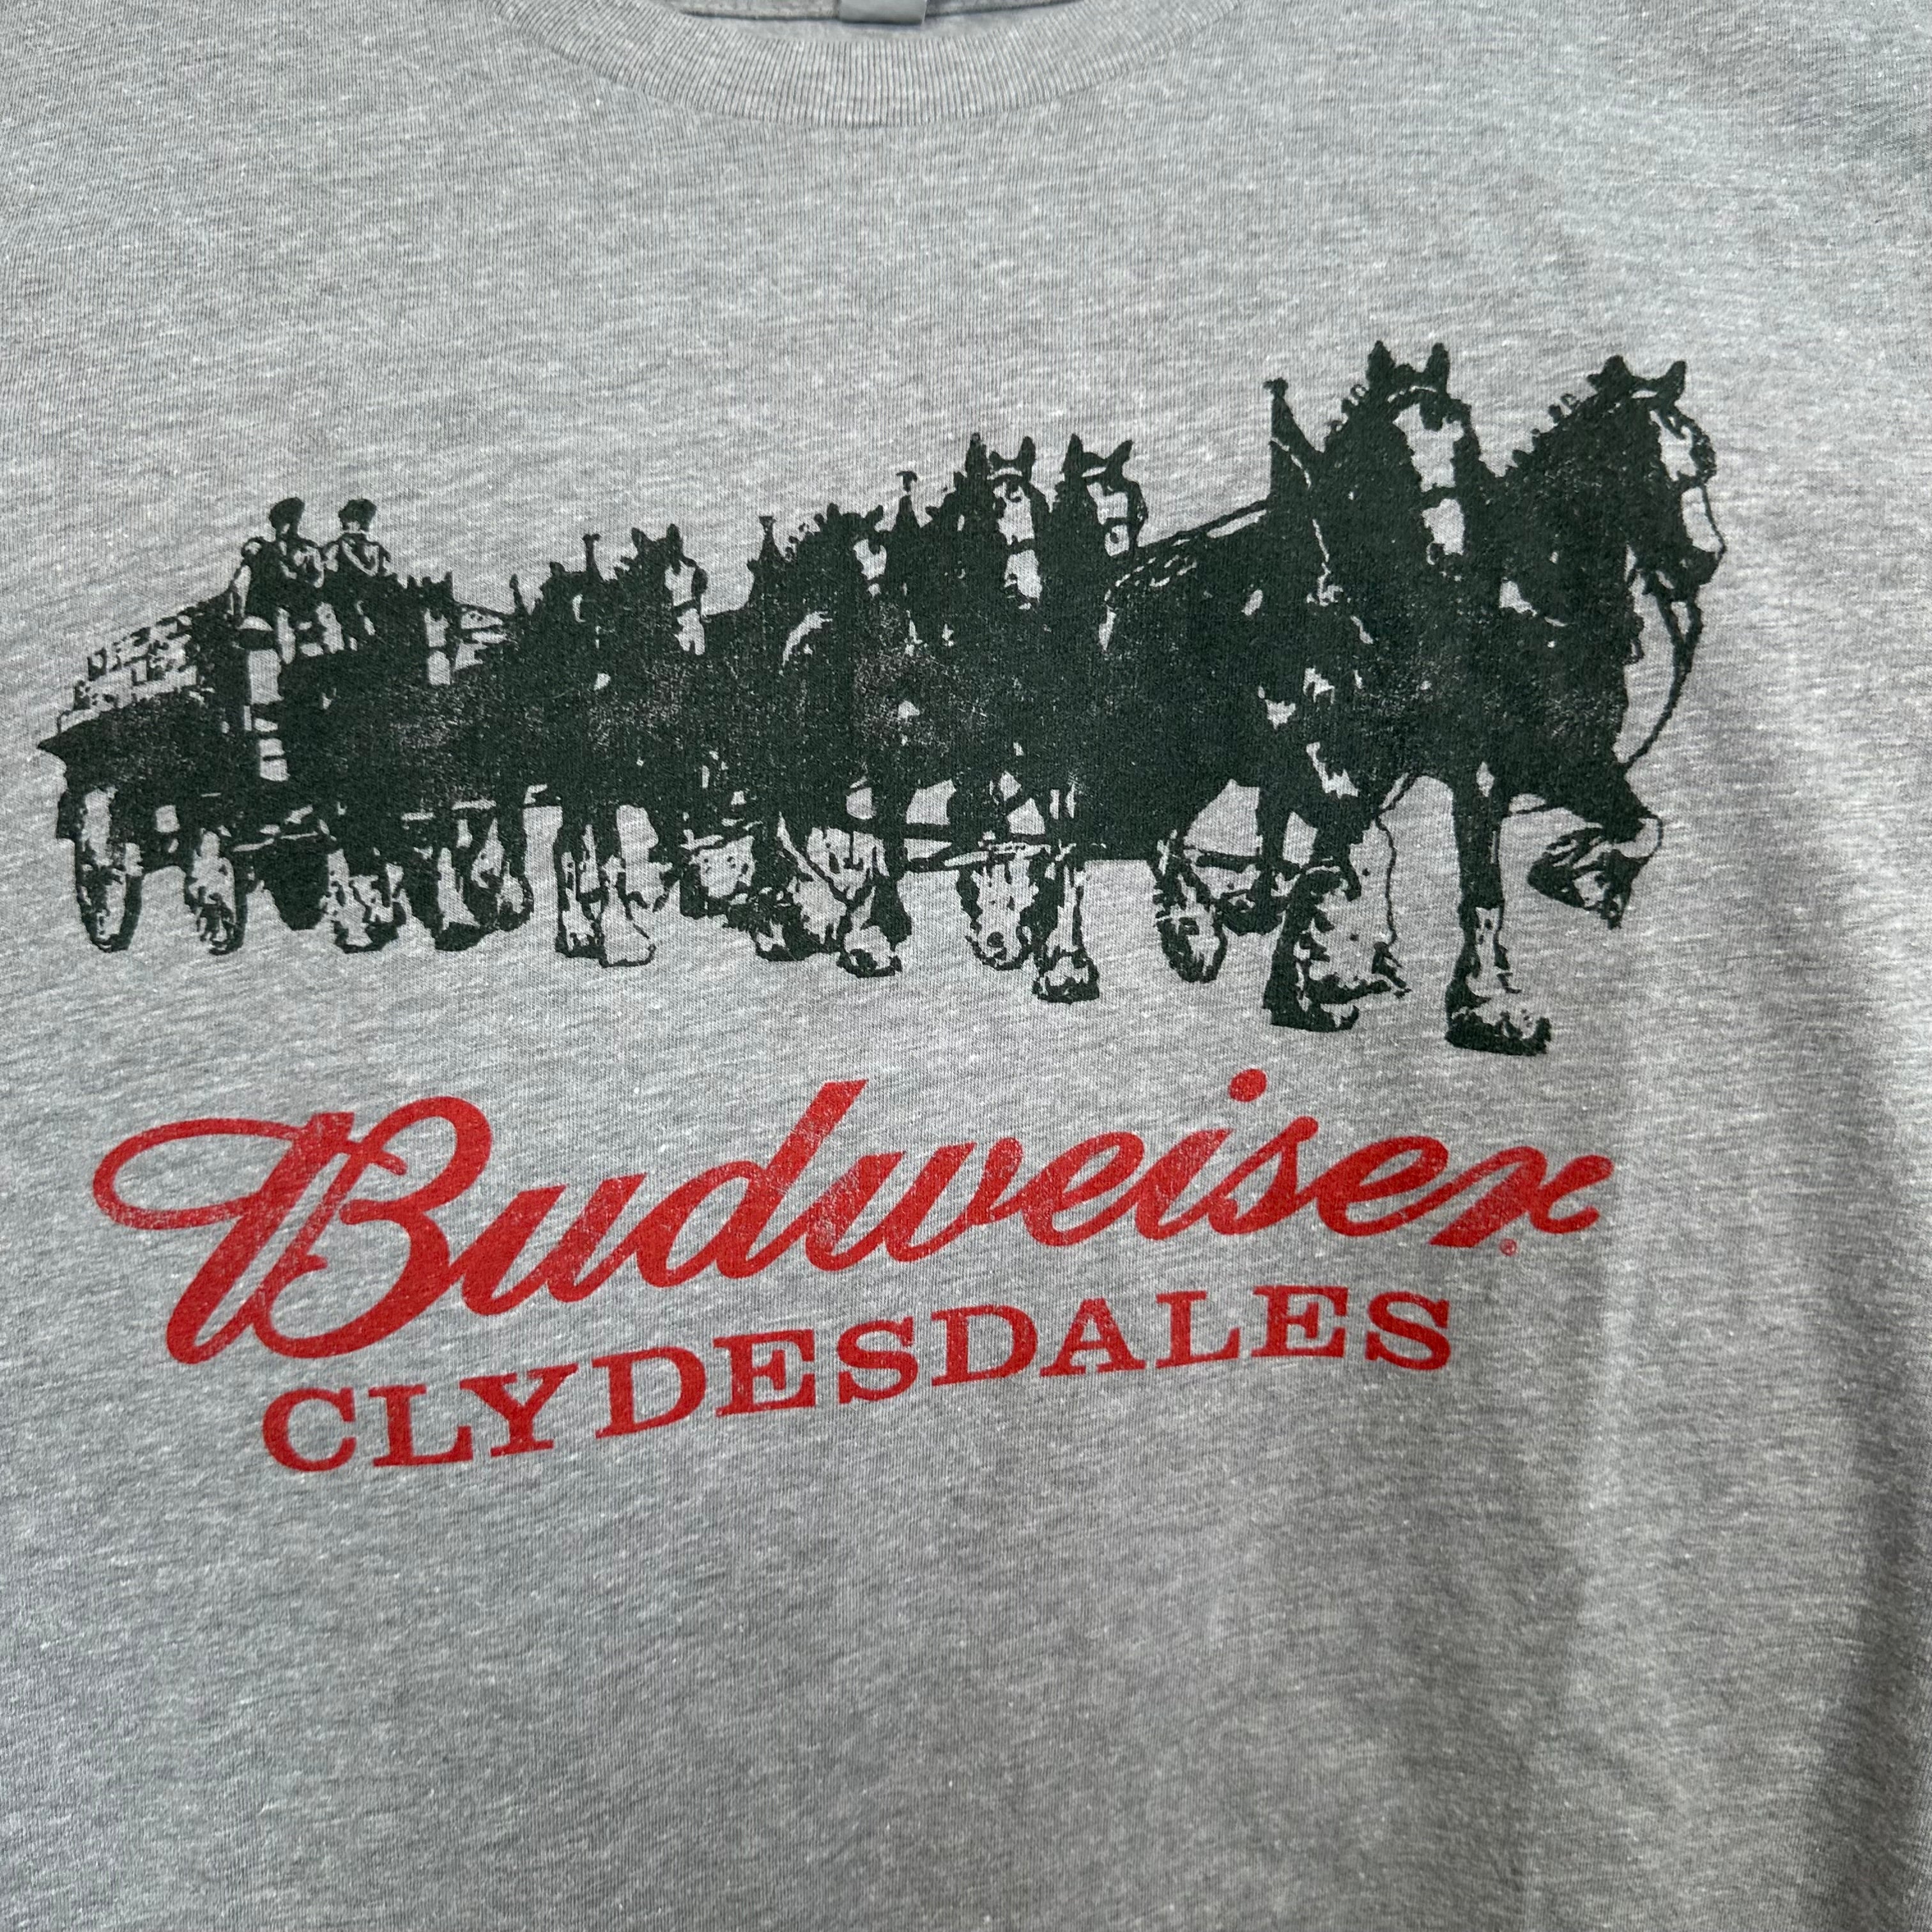 Budweiser Clydesdales T-Shirt